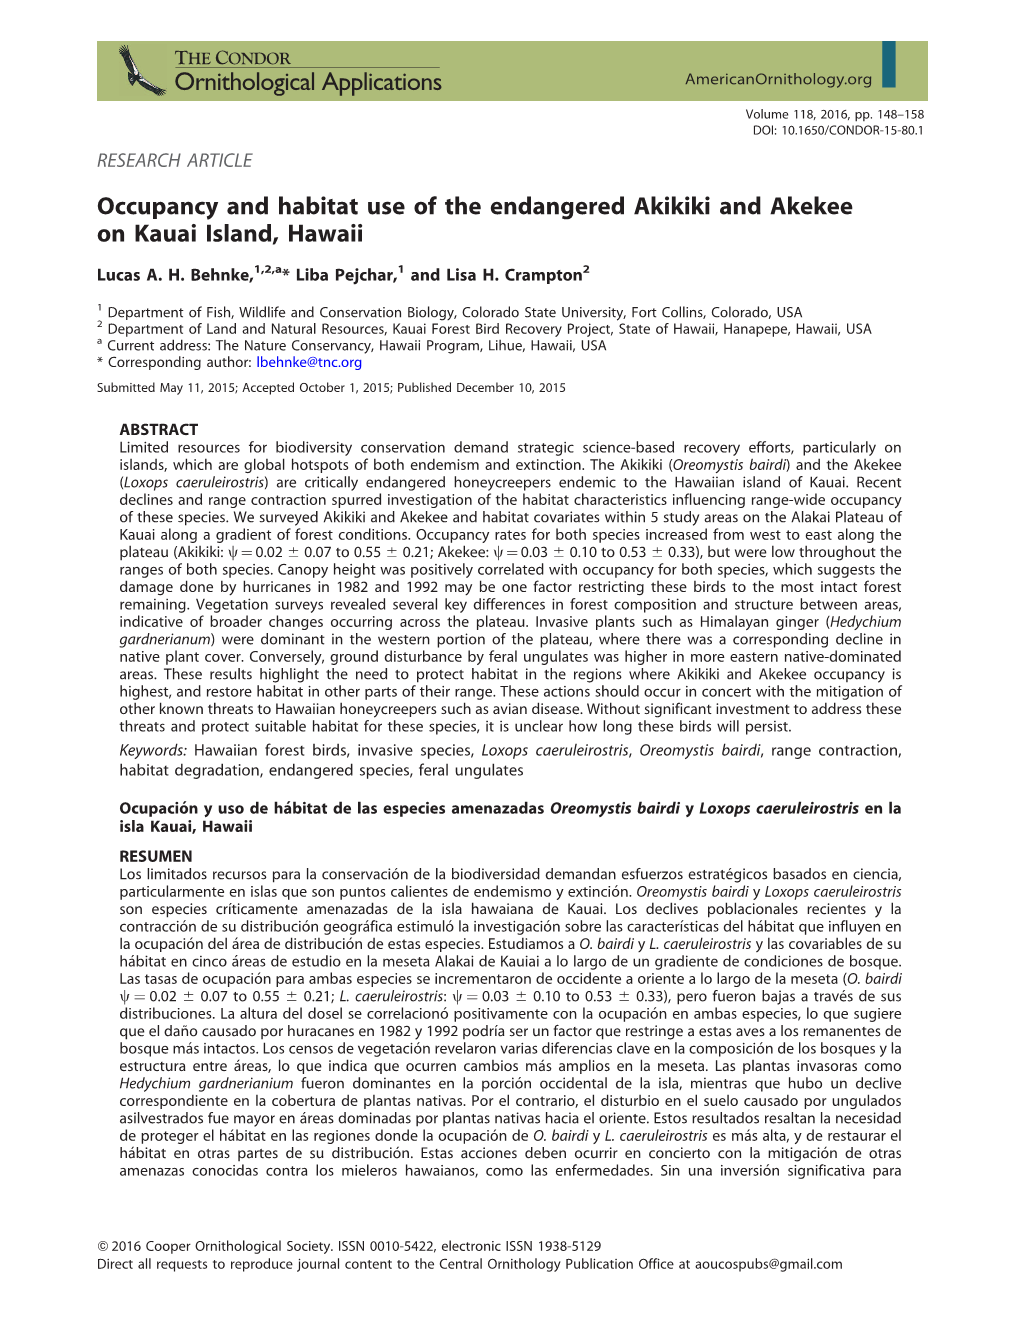 Occupancy and Habitat Use of the Endangered Akikiki and Akekee on Kauai Island, Hawaii